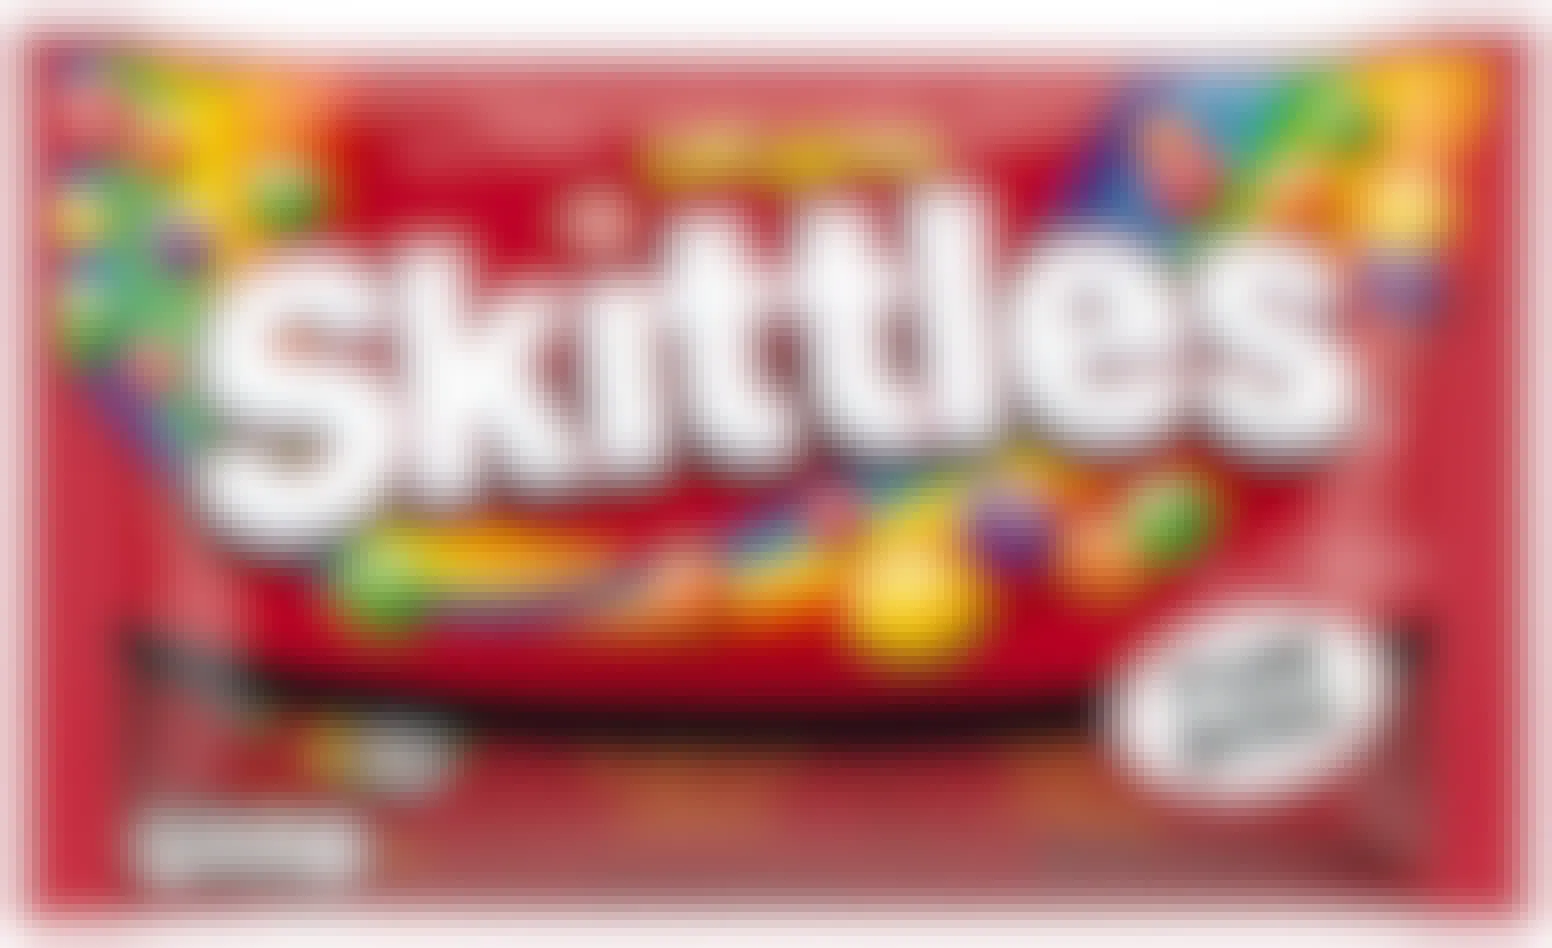 Skittles fun size candy bag